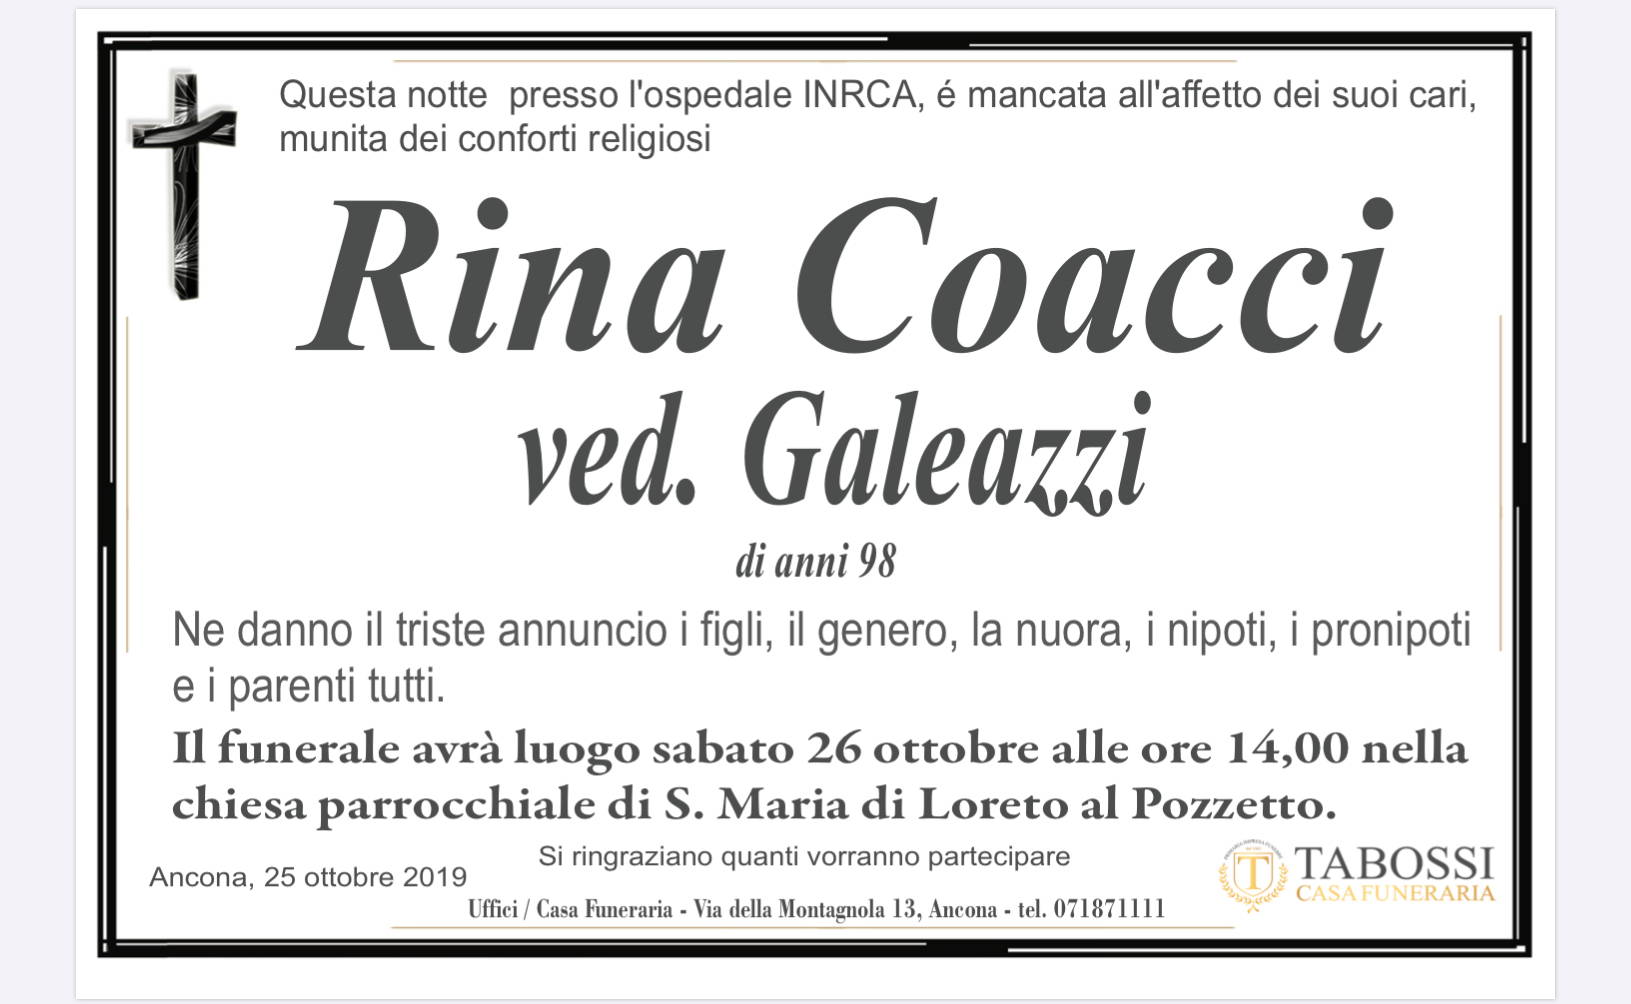 Rina Coacci